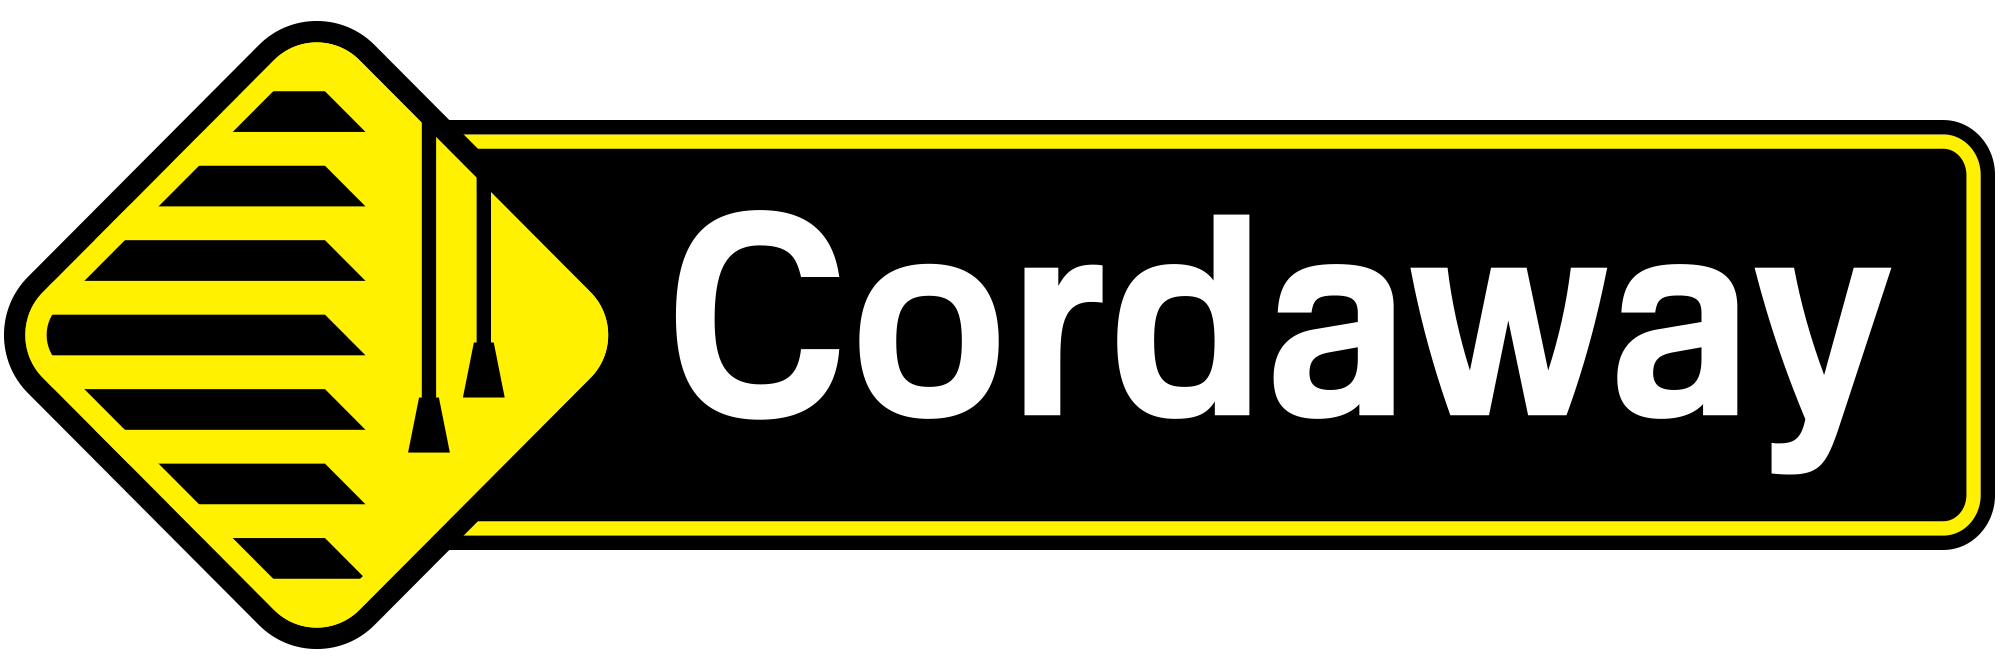 Cordaway